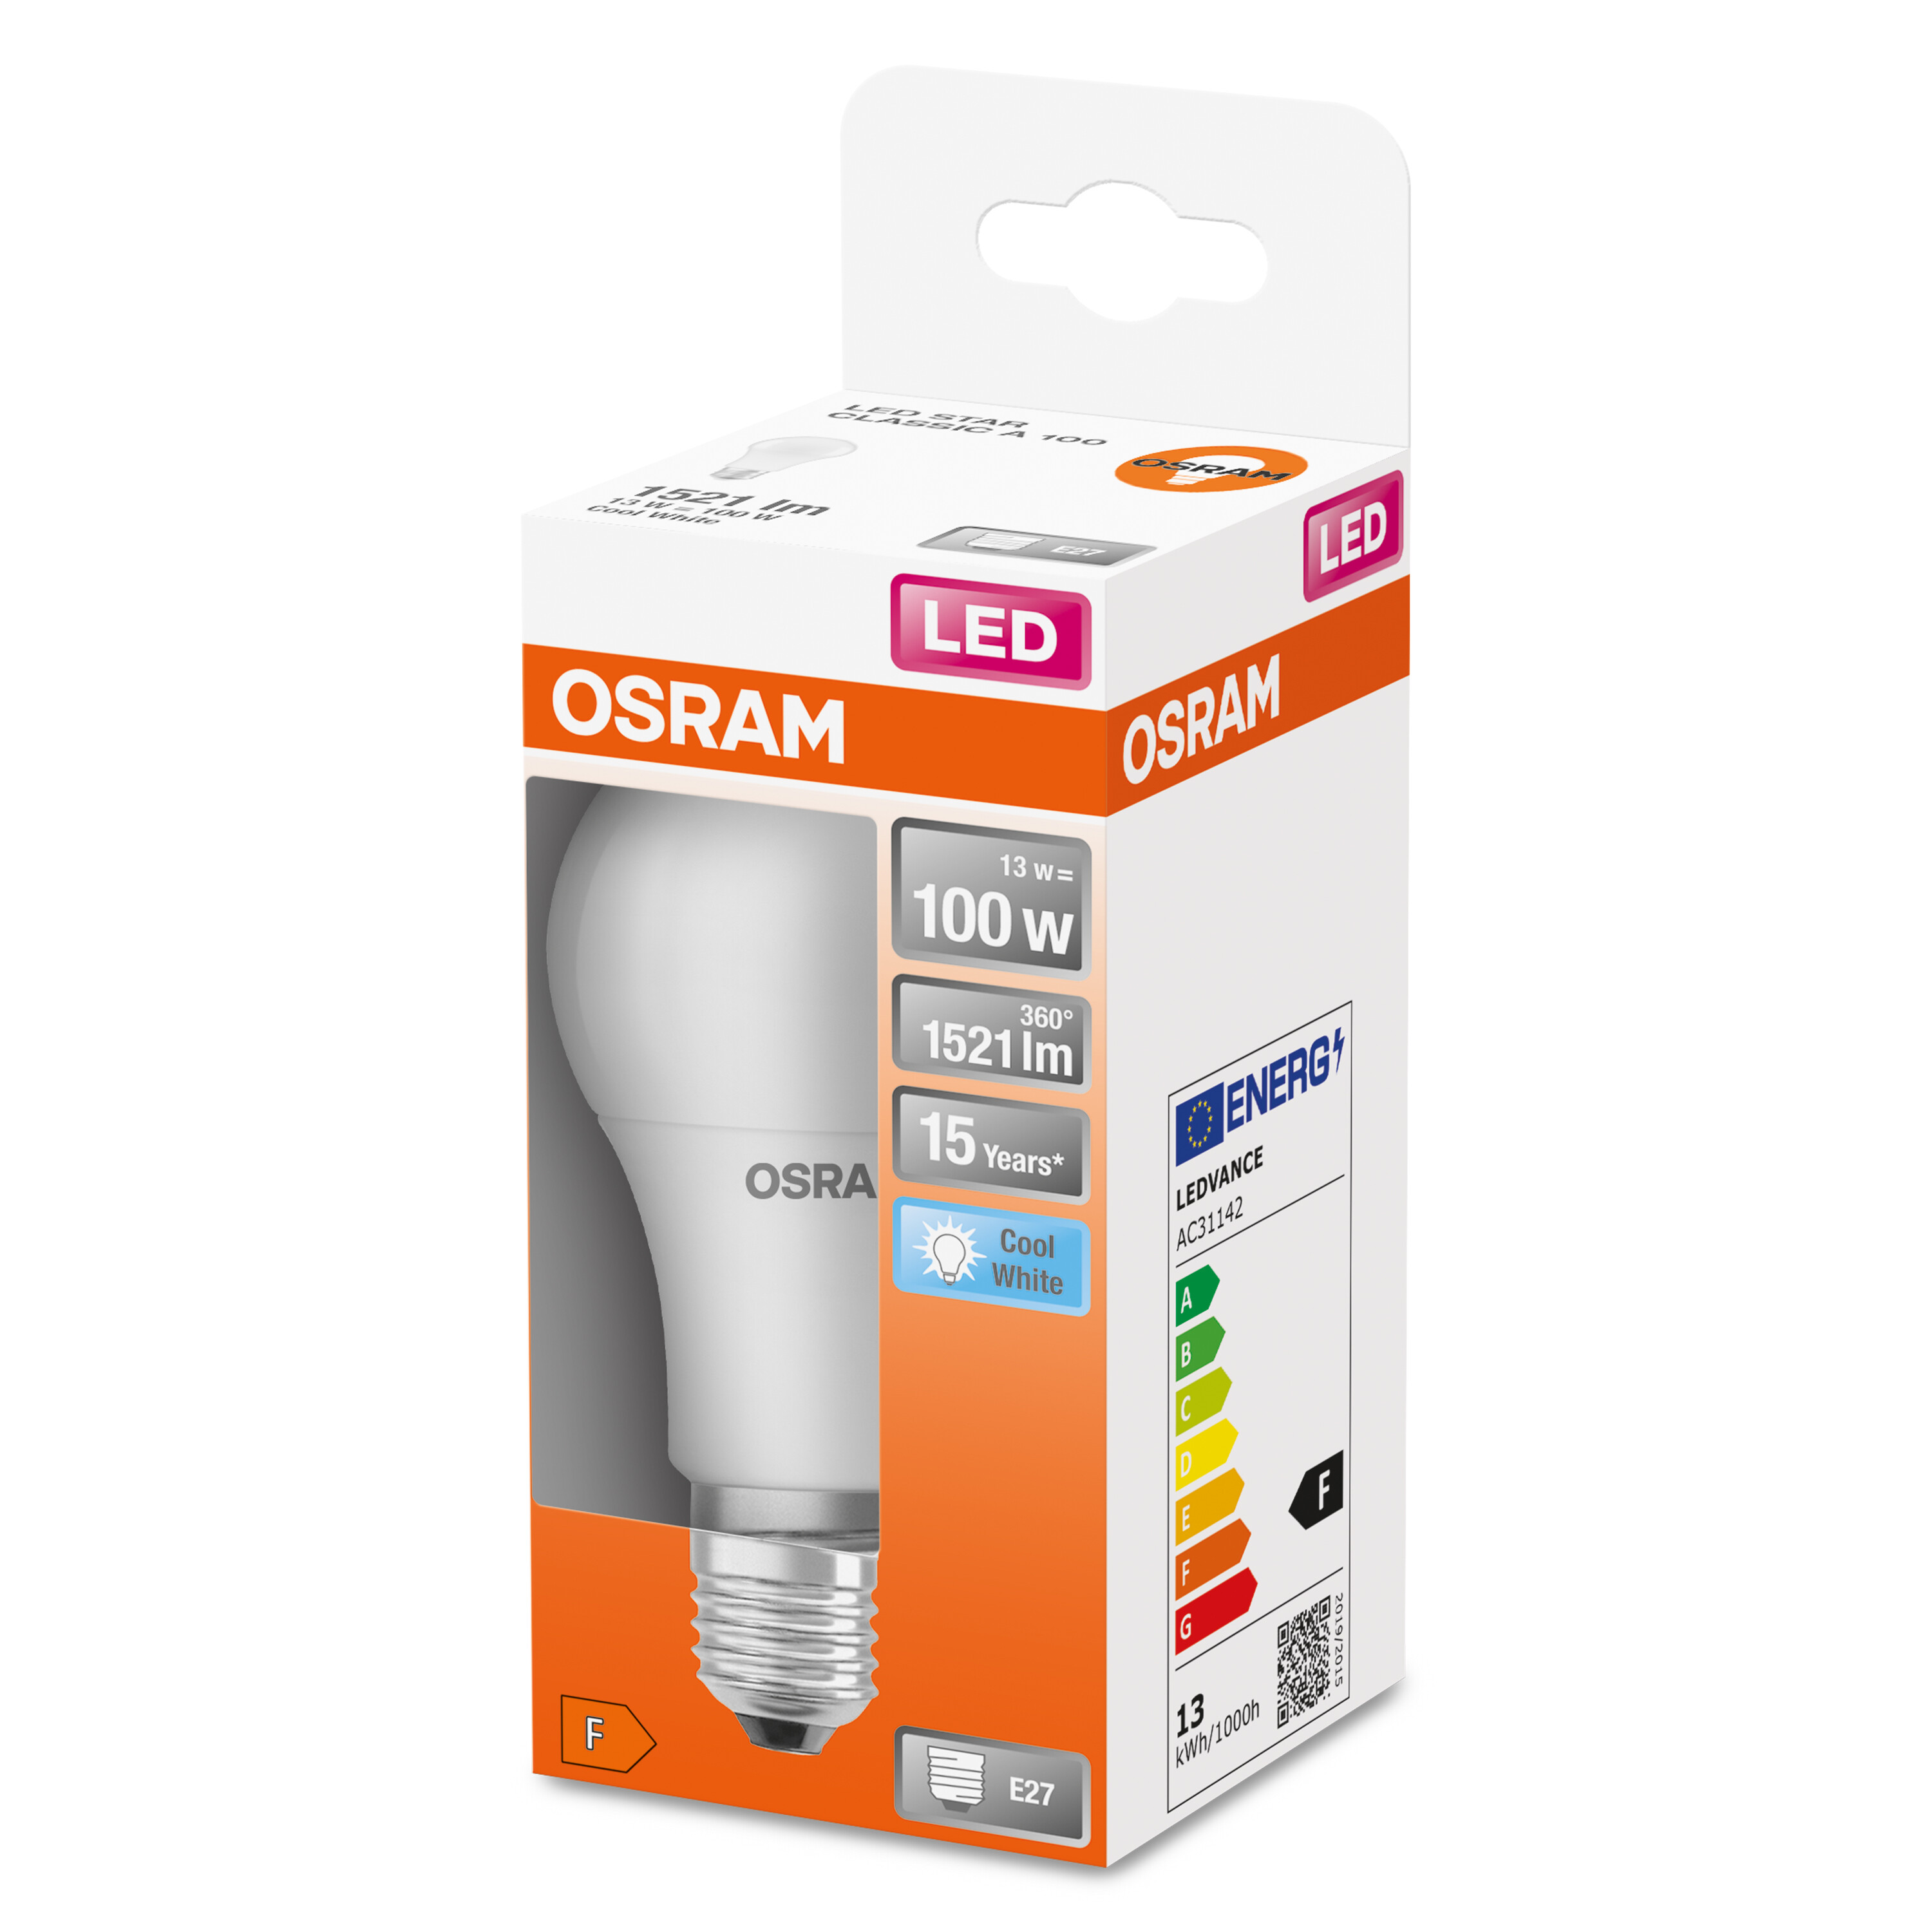 OSRAM  LED STAR CLASSIC LED Lampe Kaltweiß 1521 Lumen A